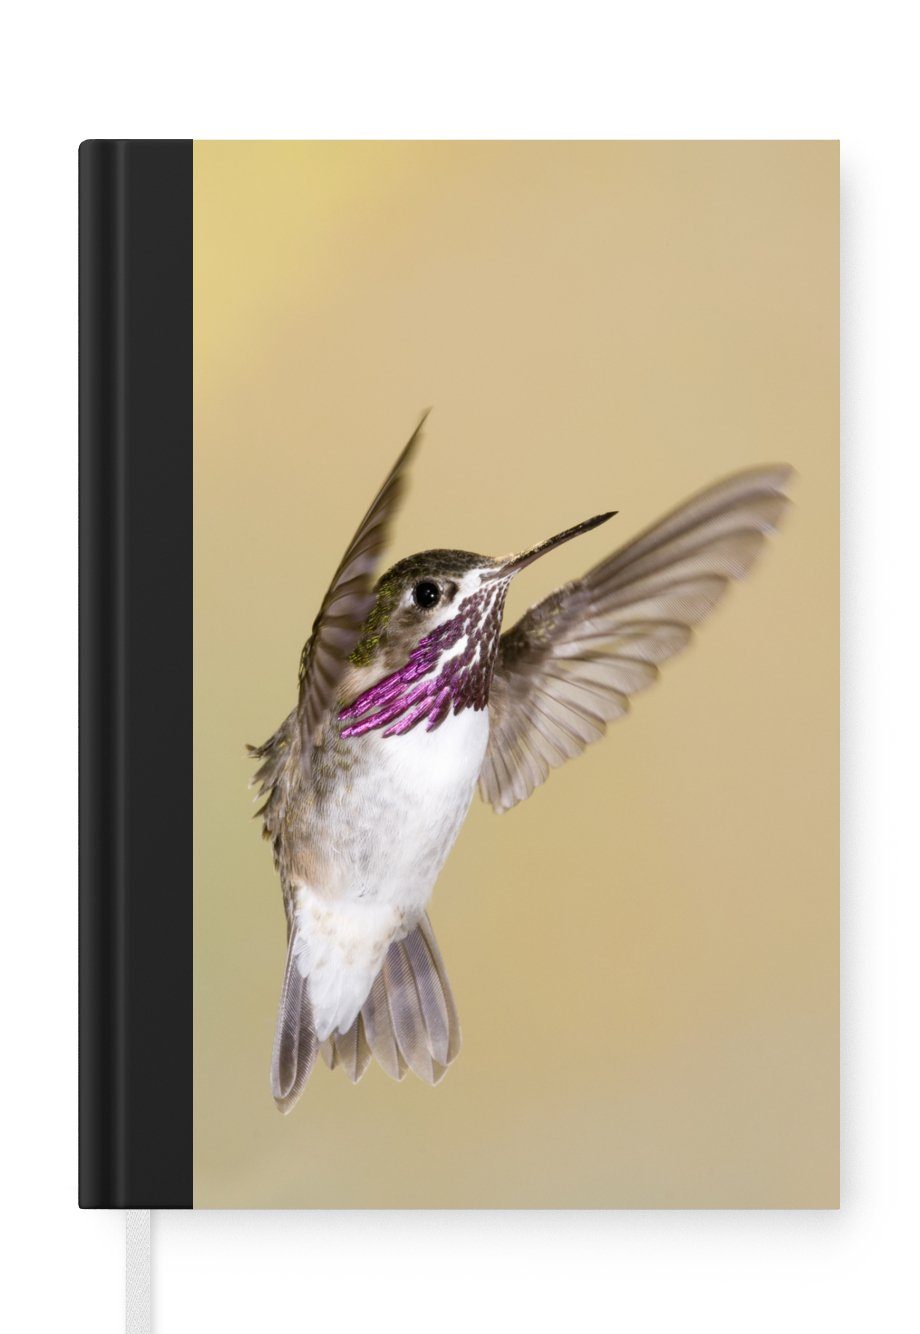 MuchoWow Notizbuch Kolibri - Journal, - Seiten, Notizheft, 98 Merkzettel, Lila, Haushaltsbuch Vogel A5, Tagebuch